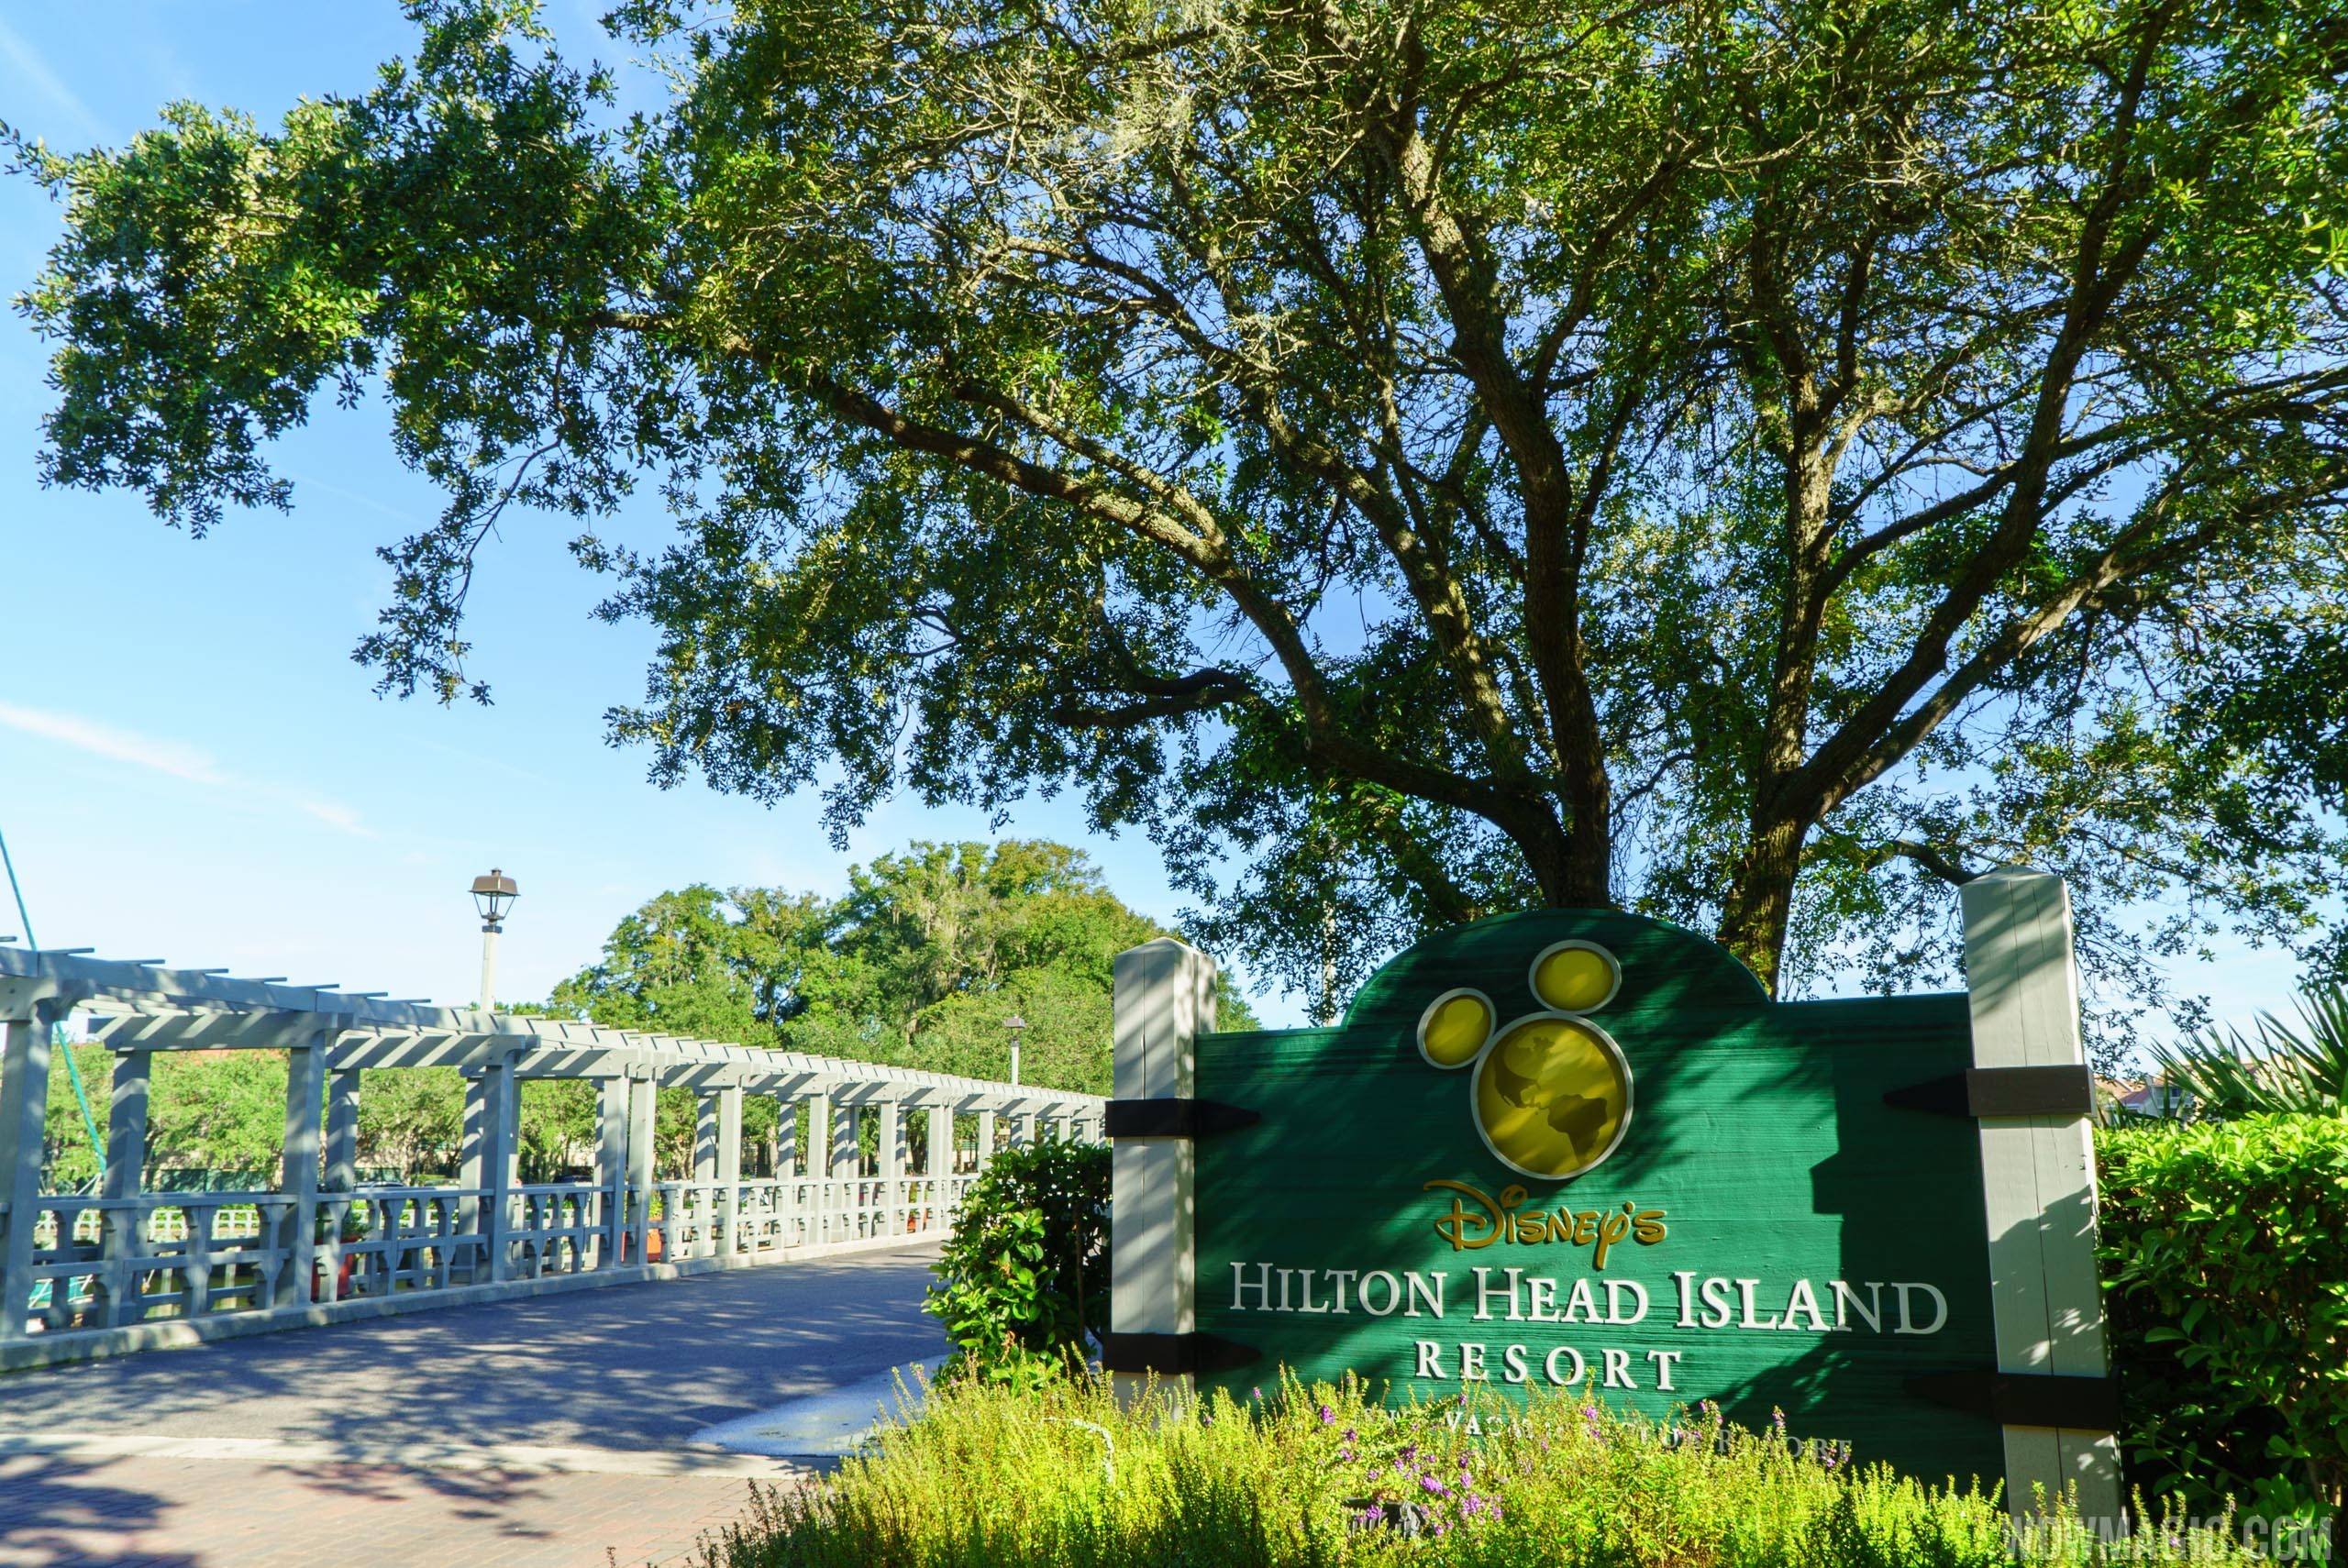 Disney's Hilton Head Island Resort - Entrance